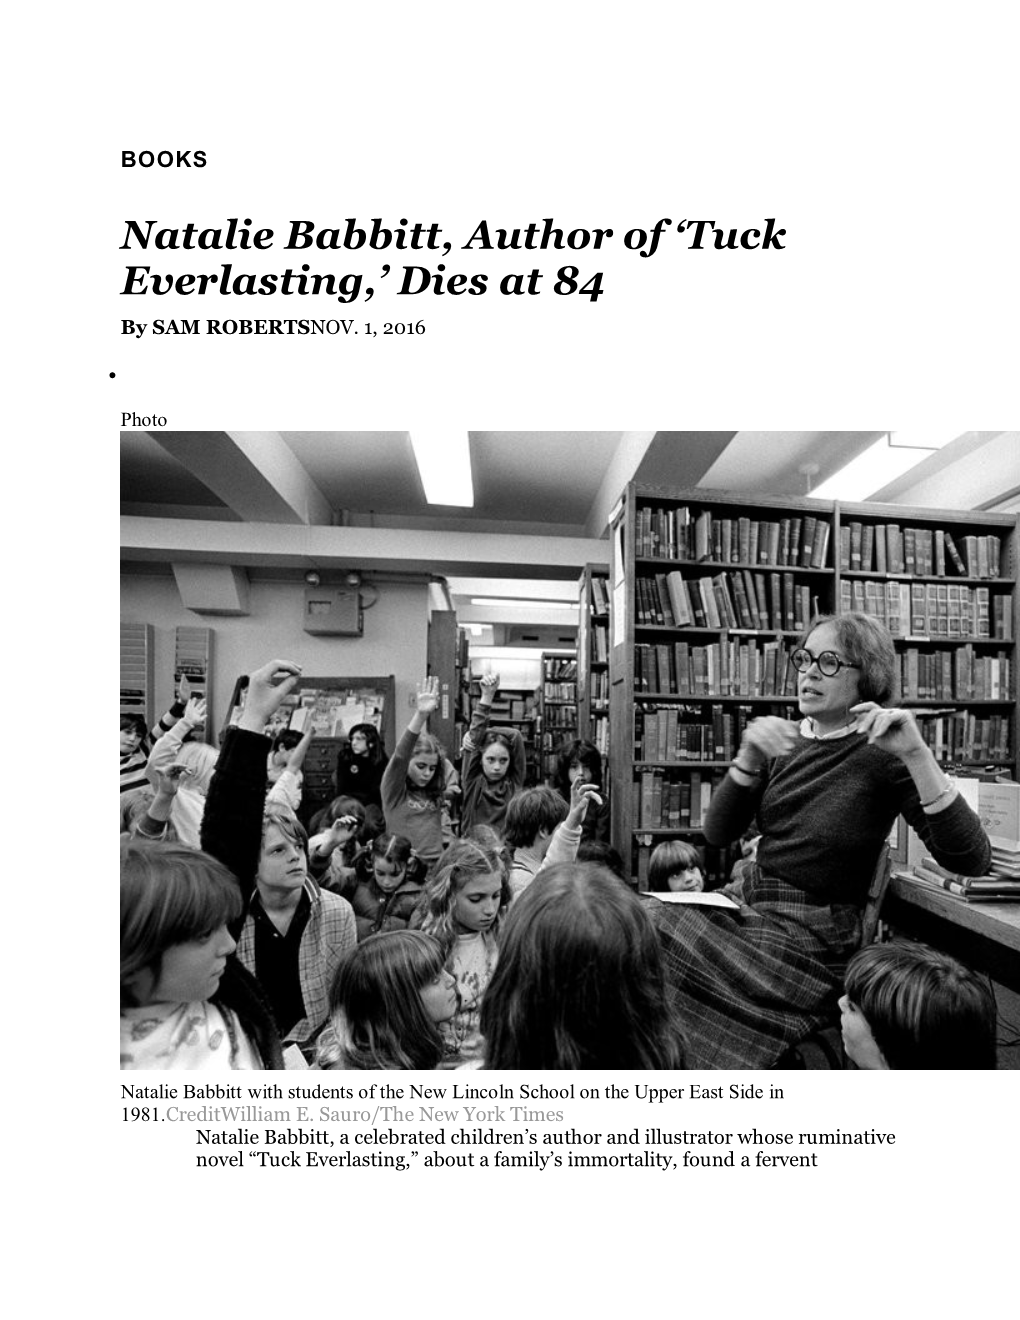 Natalie Babbitt, Author of 'Tuck Everlasting,'